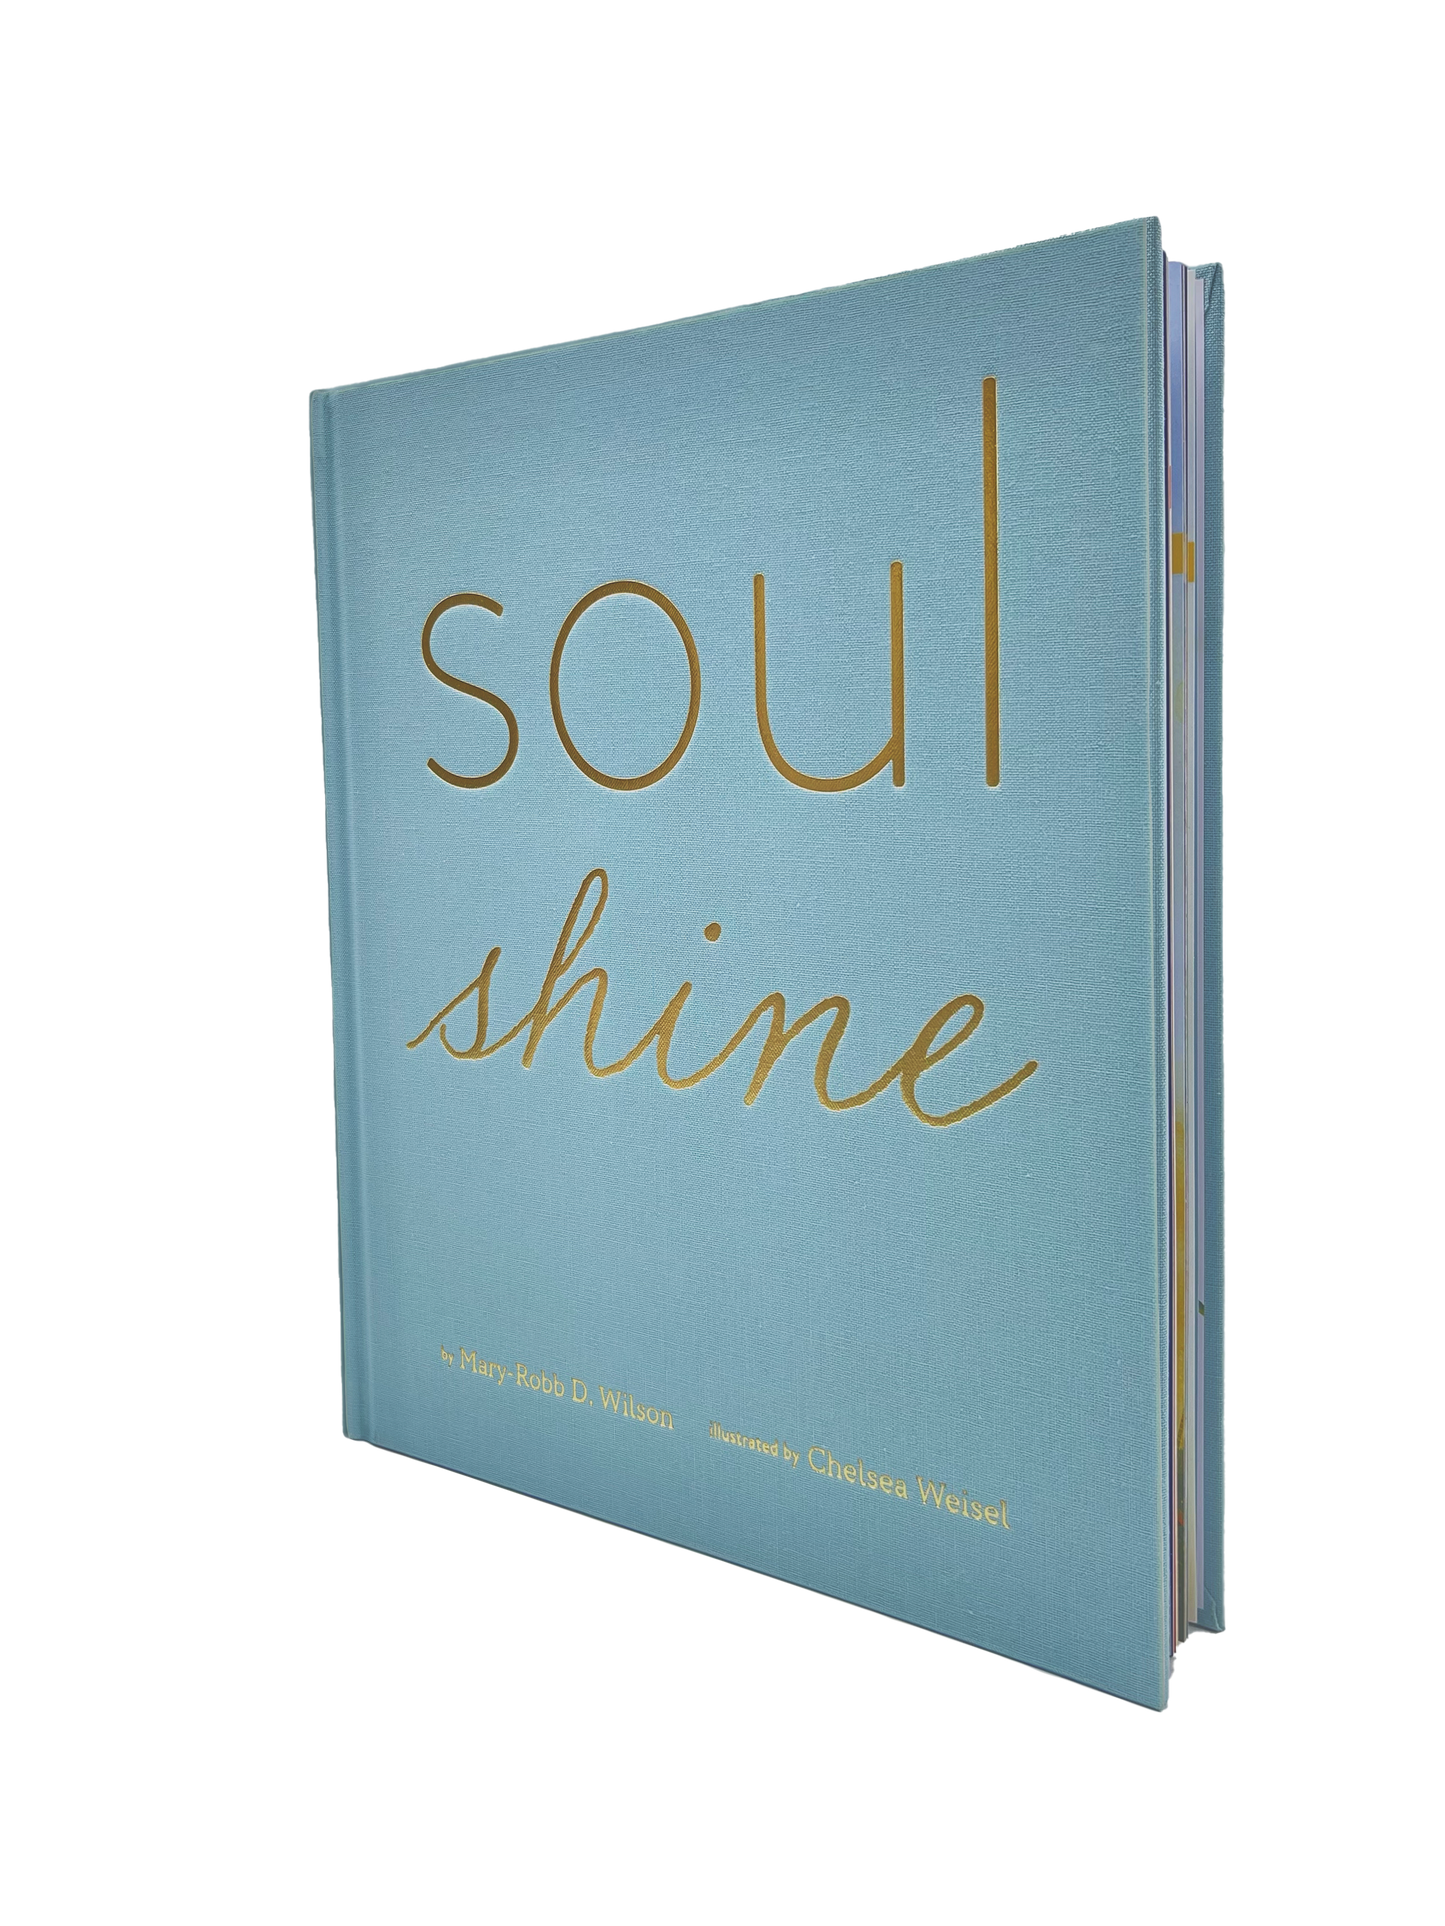 Soulshine Book